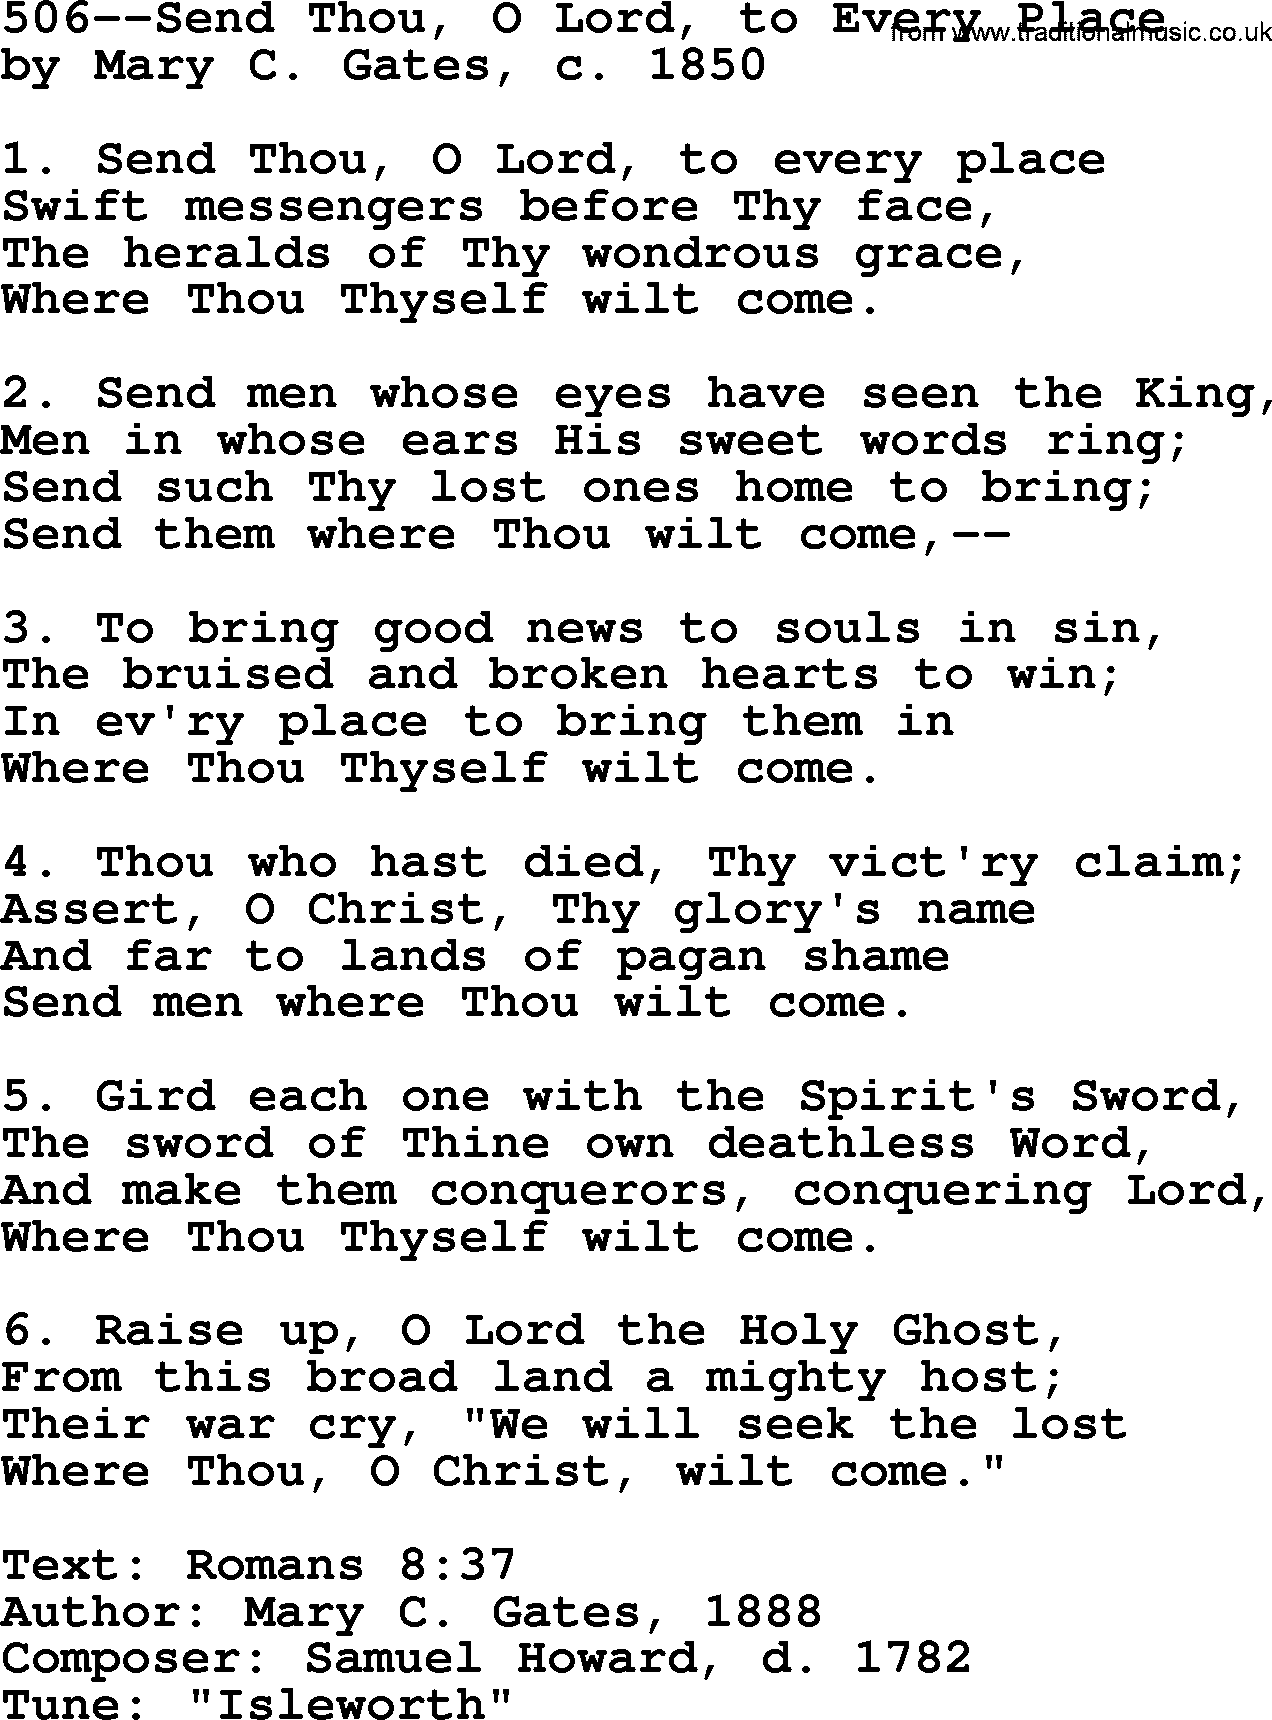 Lutheran Hymn: 506--Send Thou, O Lord, to Every Place.txt lyrics with PDF